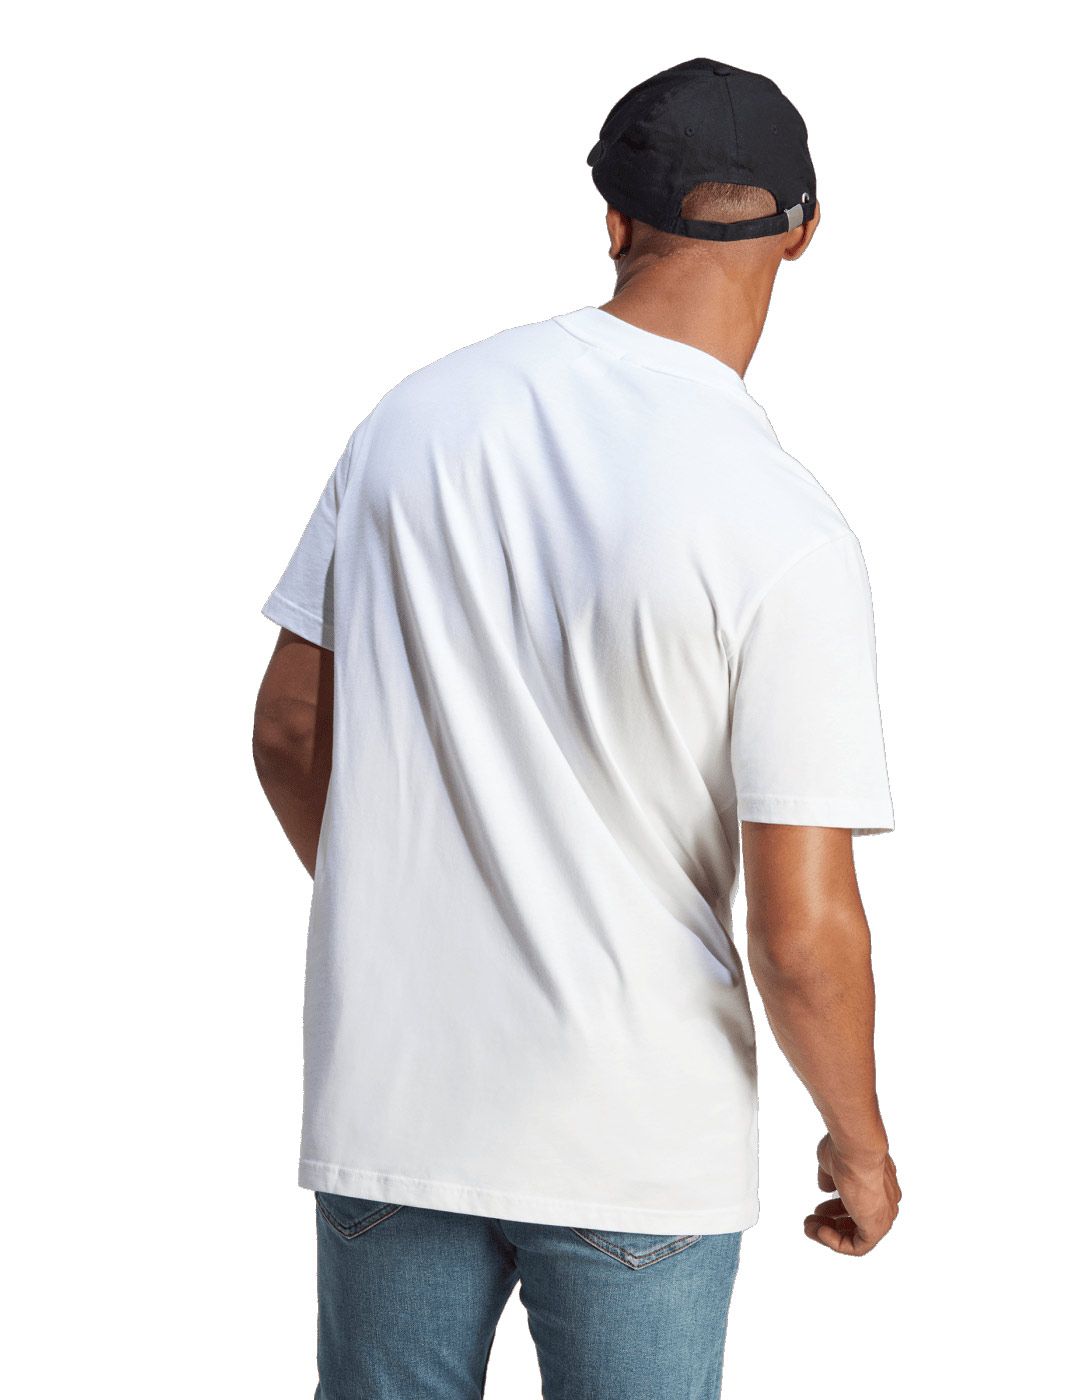 camiseta adidas manga corta hombre, blanca